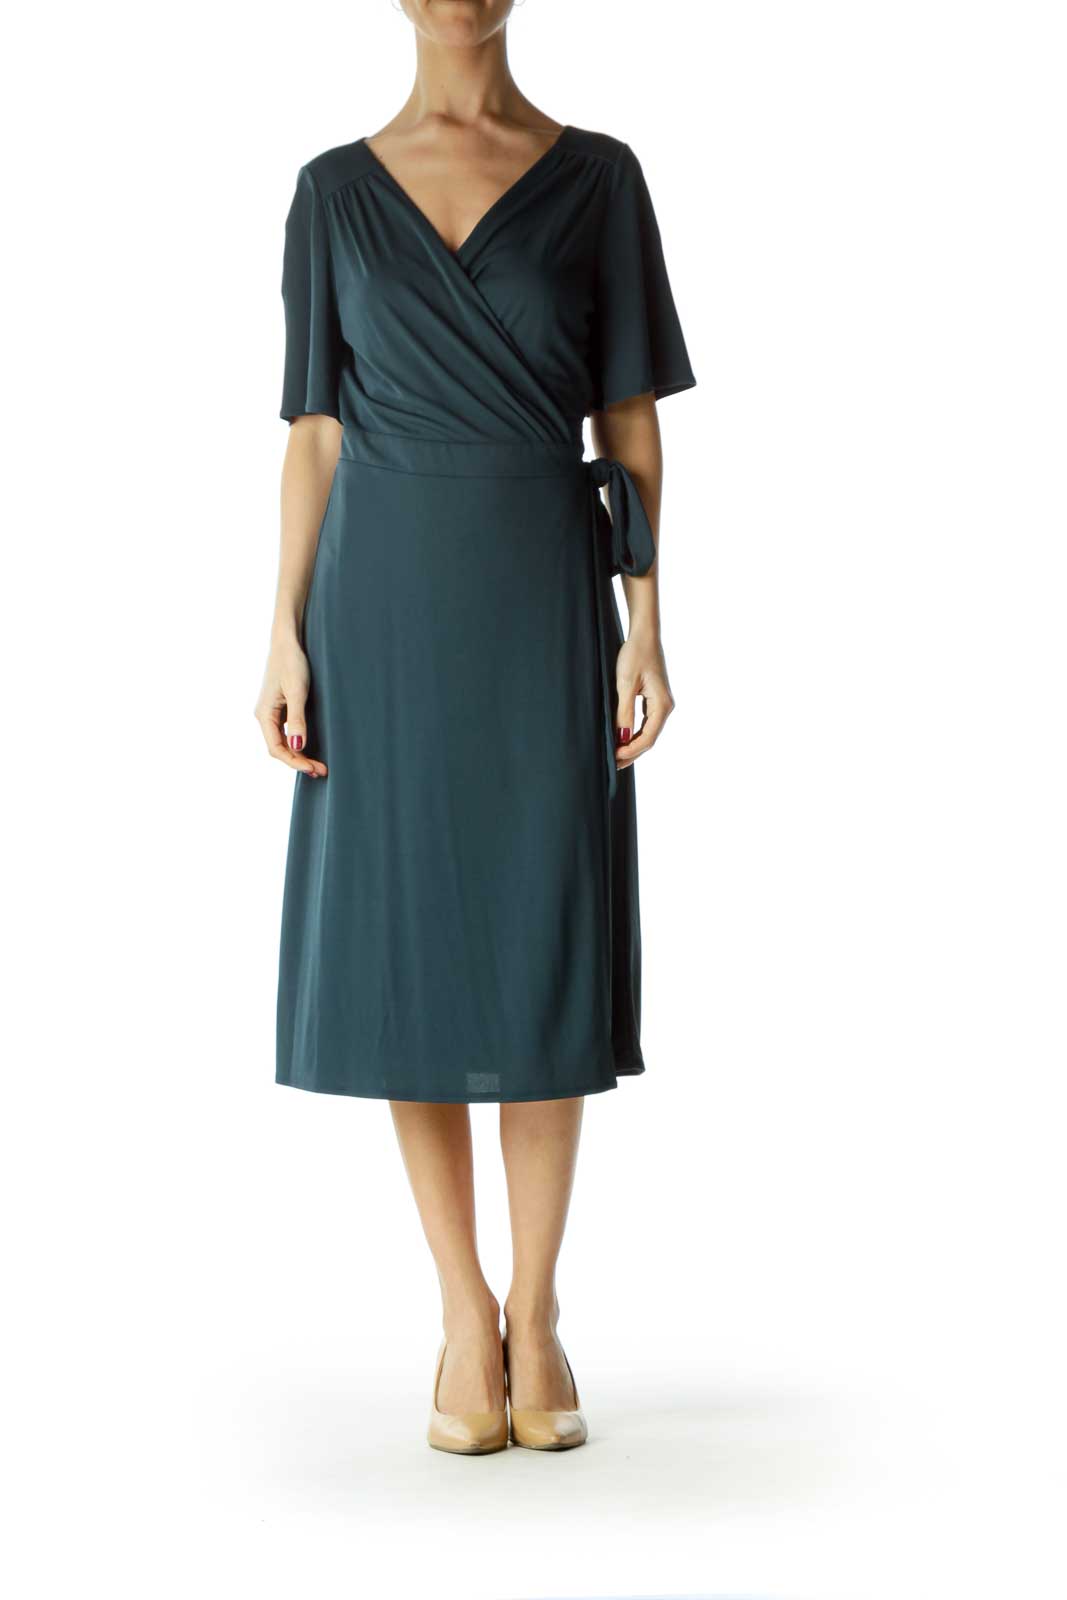 LOFT - Green Wrap Short Sleeve Dress Polyester Rayon | SilkRoll